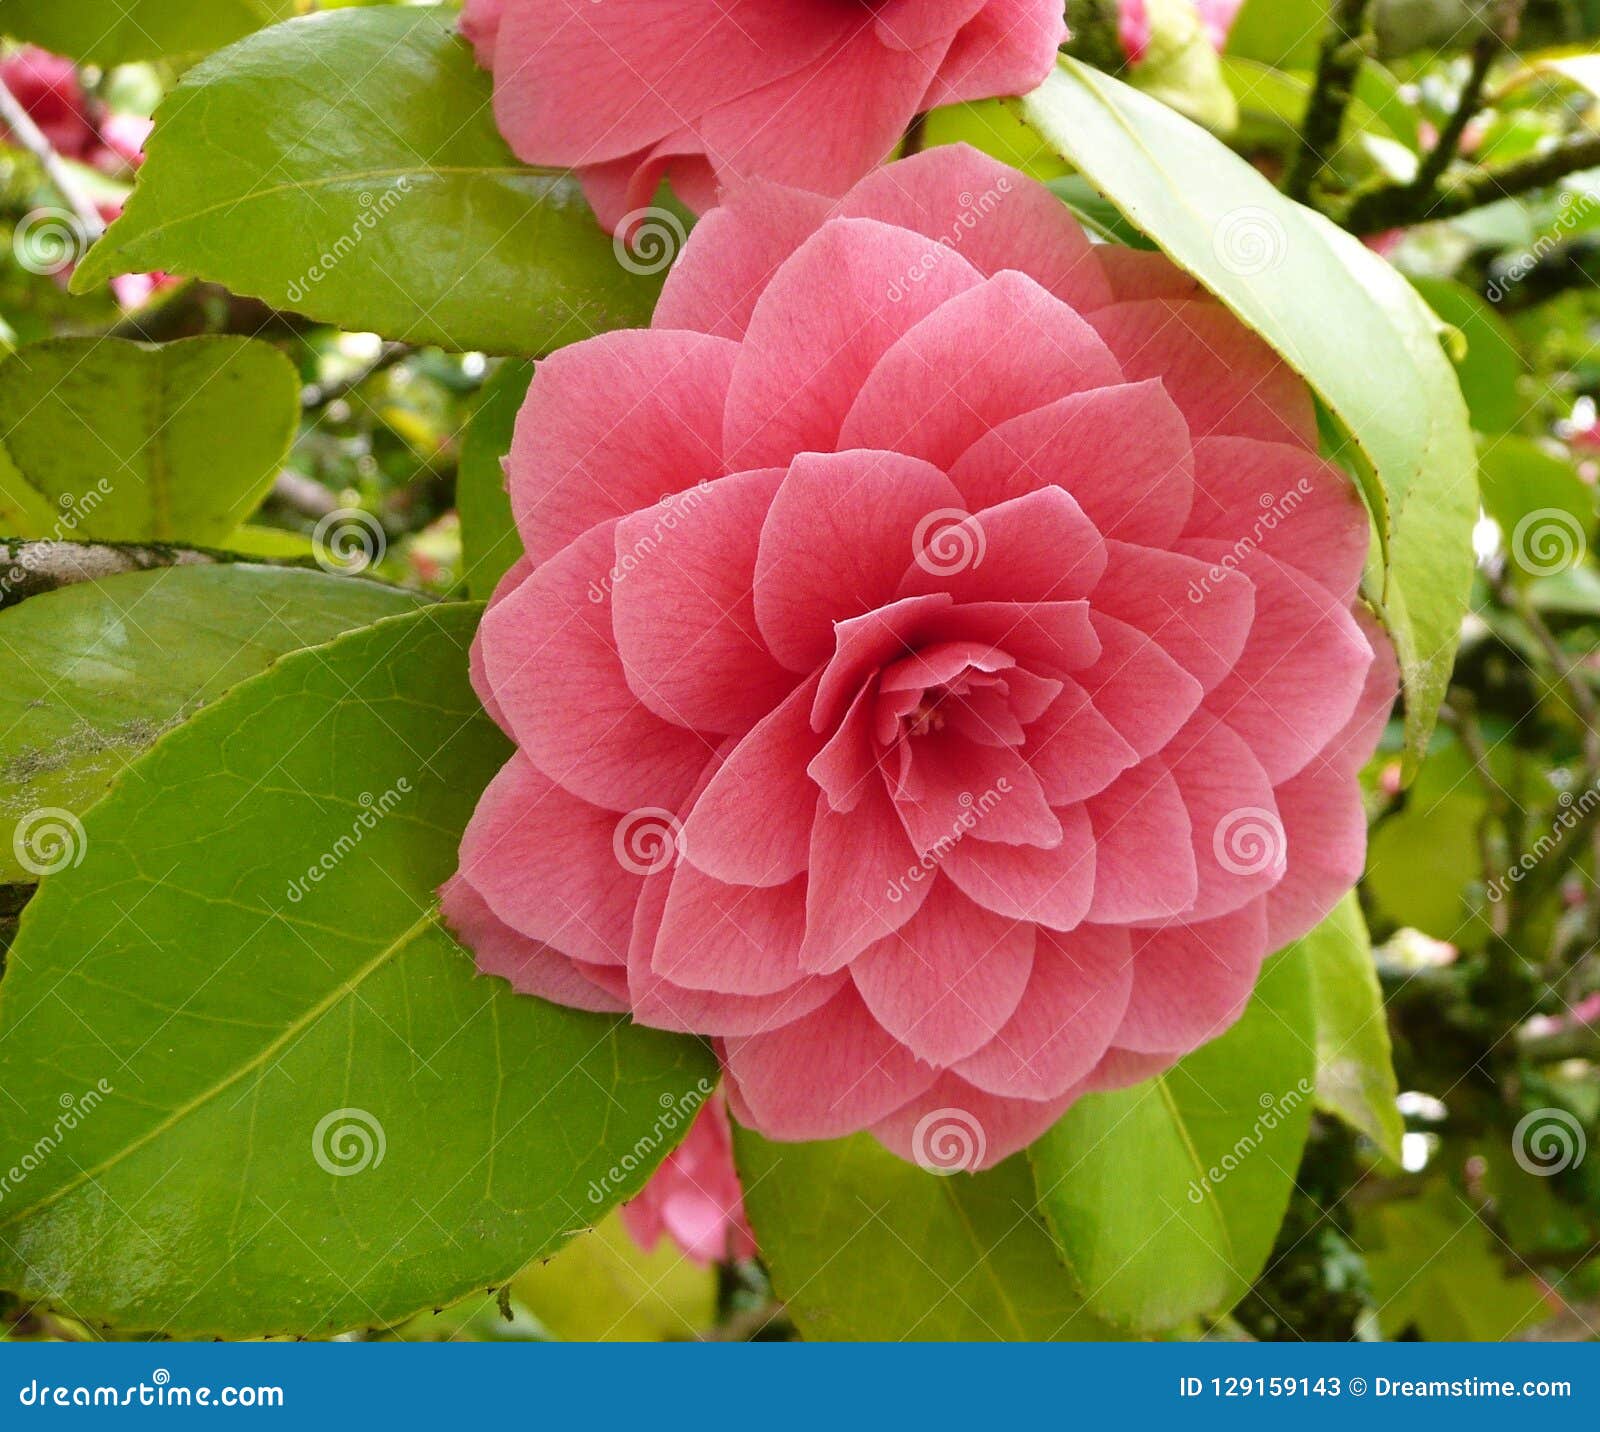 fleur de camÃÂ©lia rose